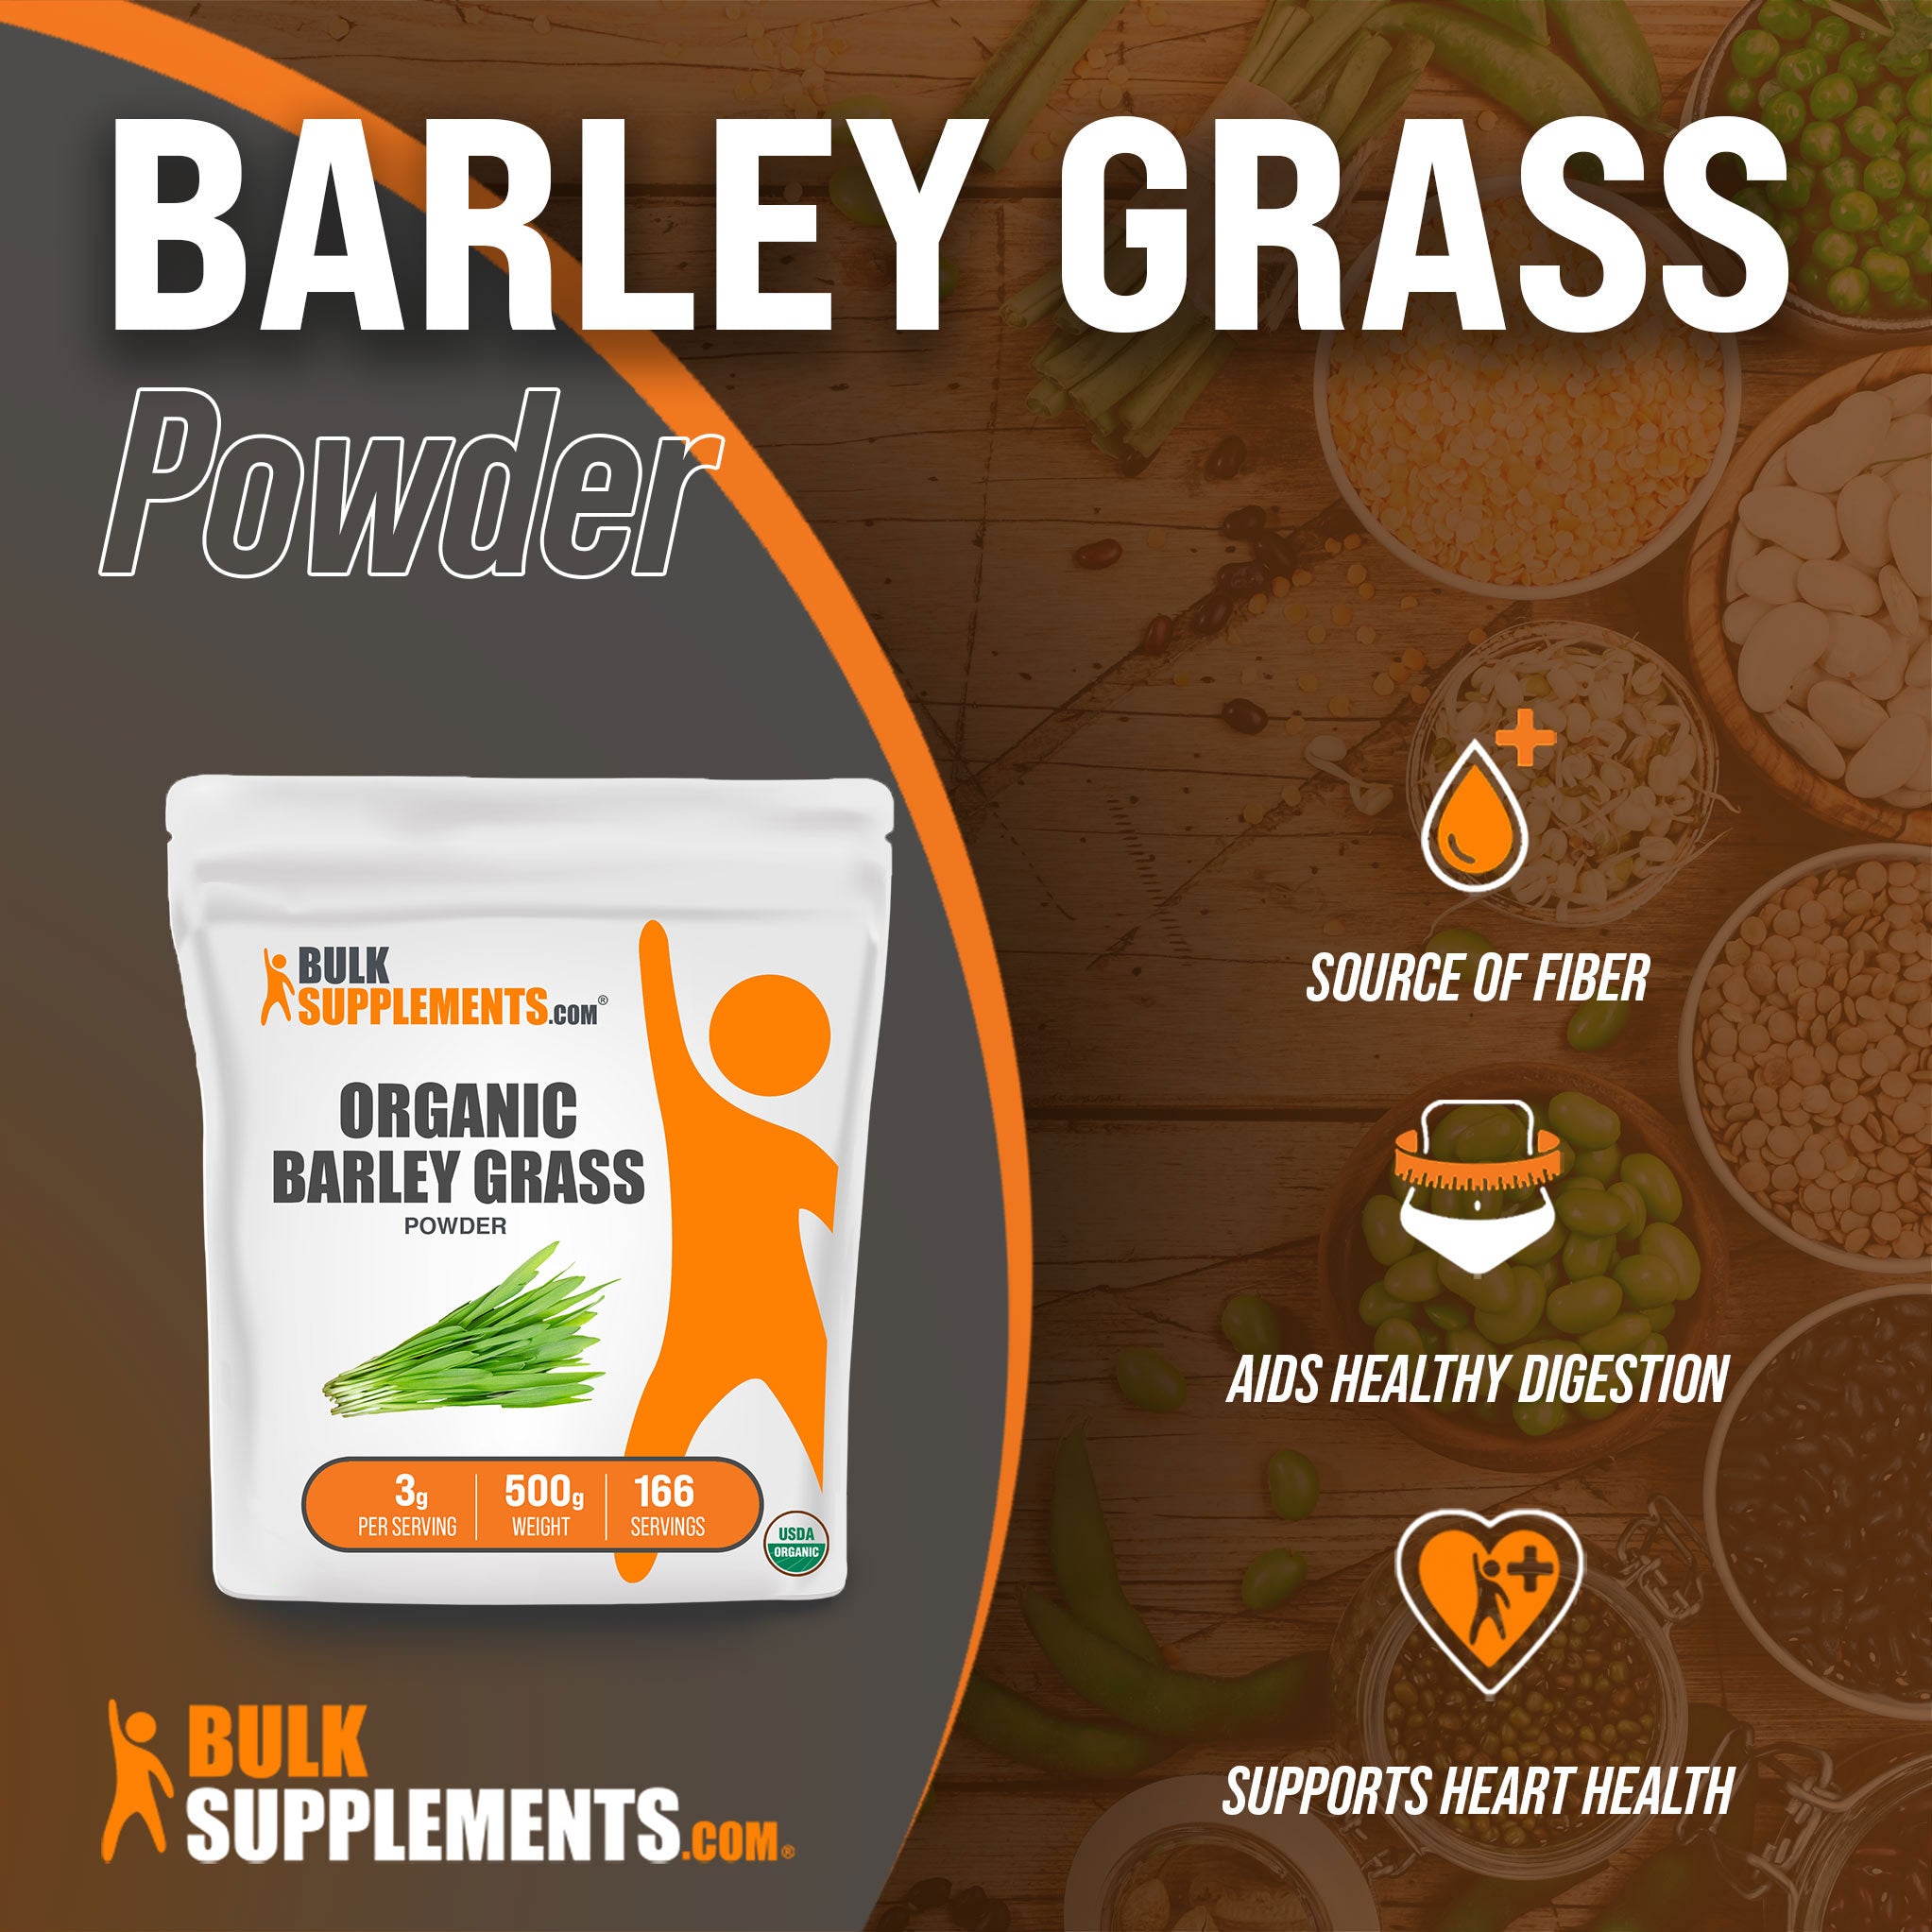 Organic Barley Grass Powder from Bulk Supplements for healthy digestion